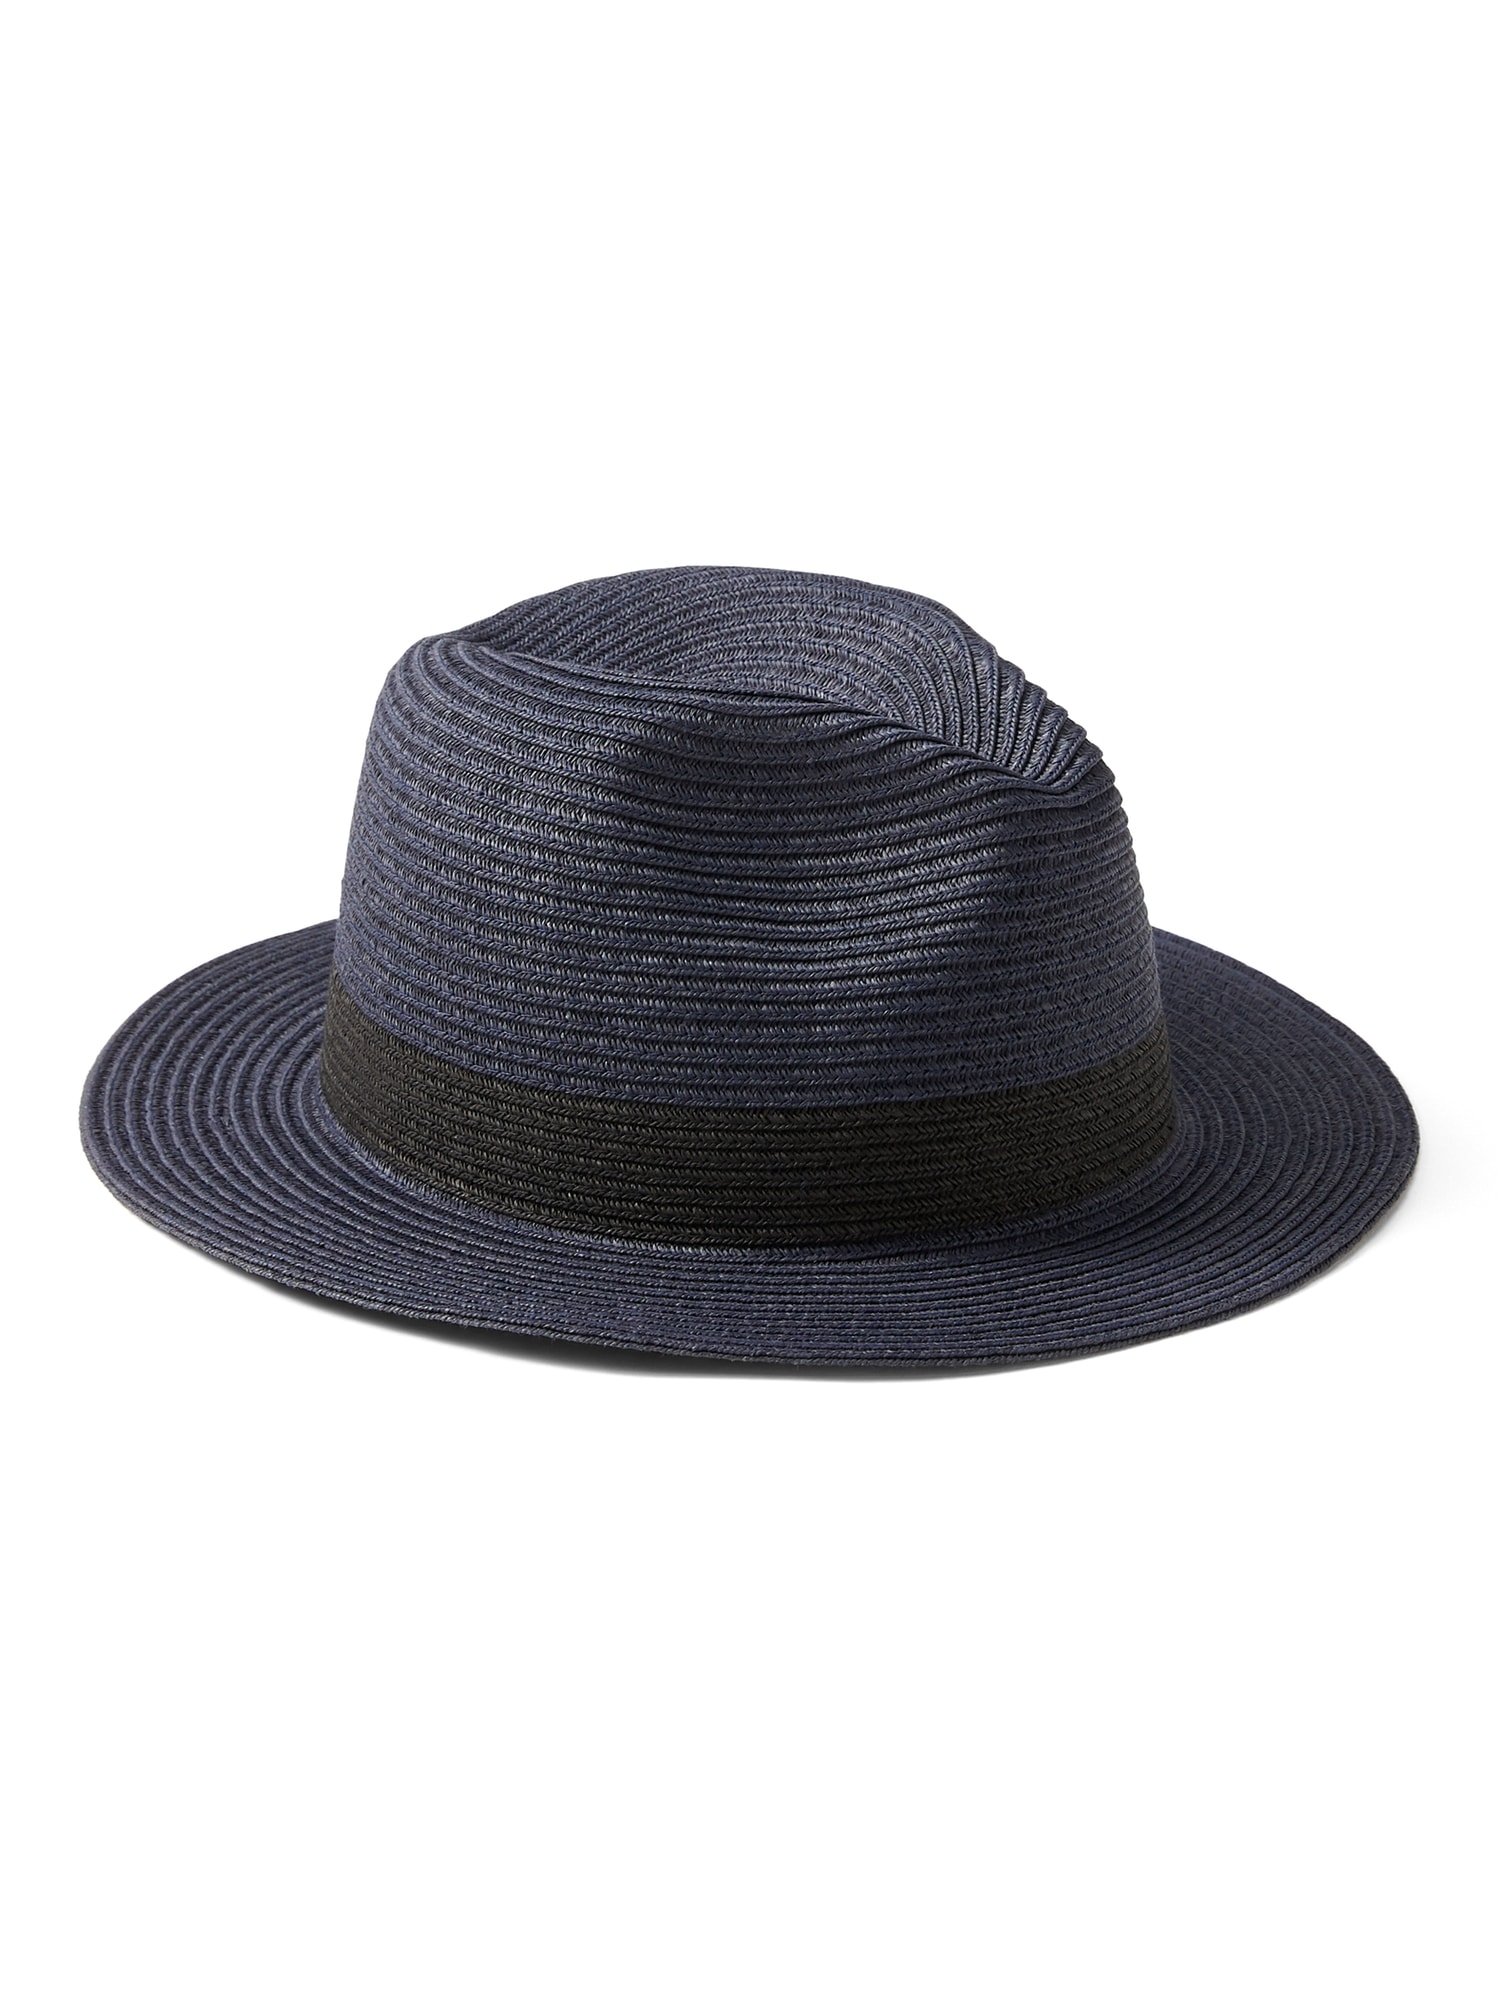 Straw Fedora Hat